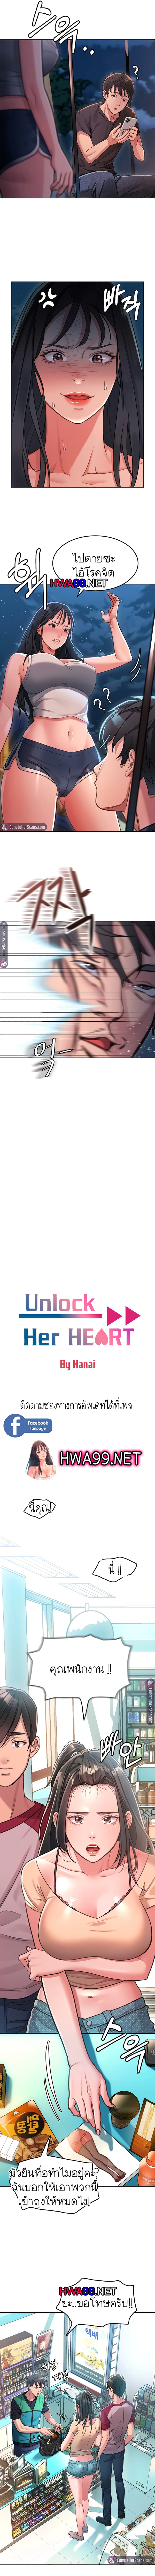 Unlock Her Heart 1-1